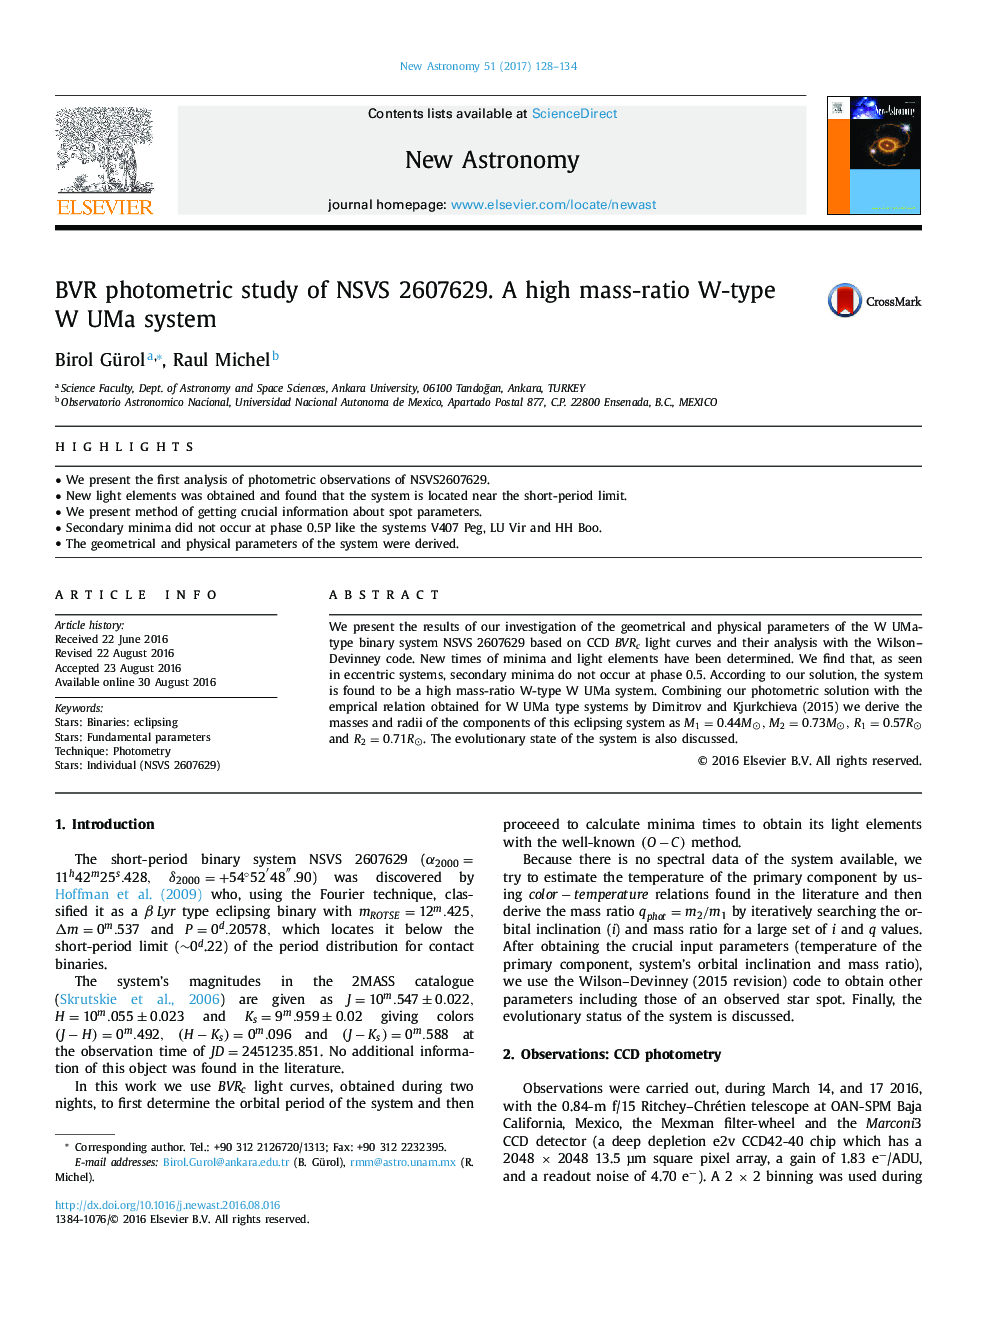 BVR photometric study of NSVS 2607629. A high mass-ratio W-type W UMa system